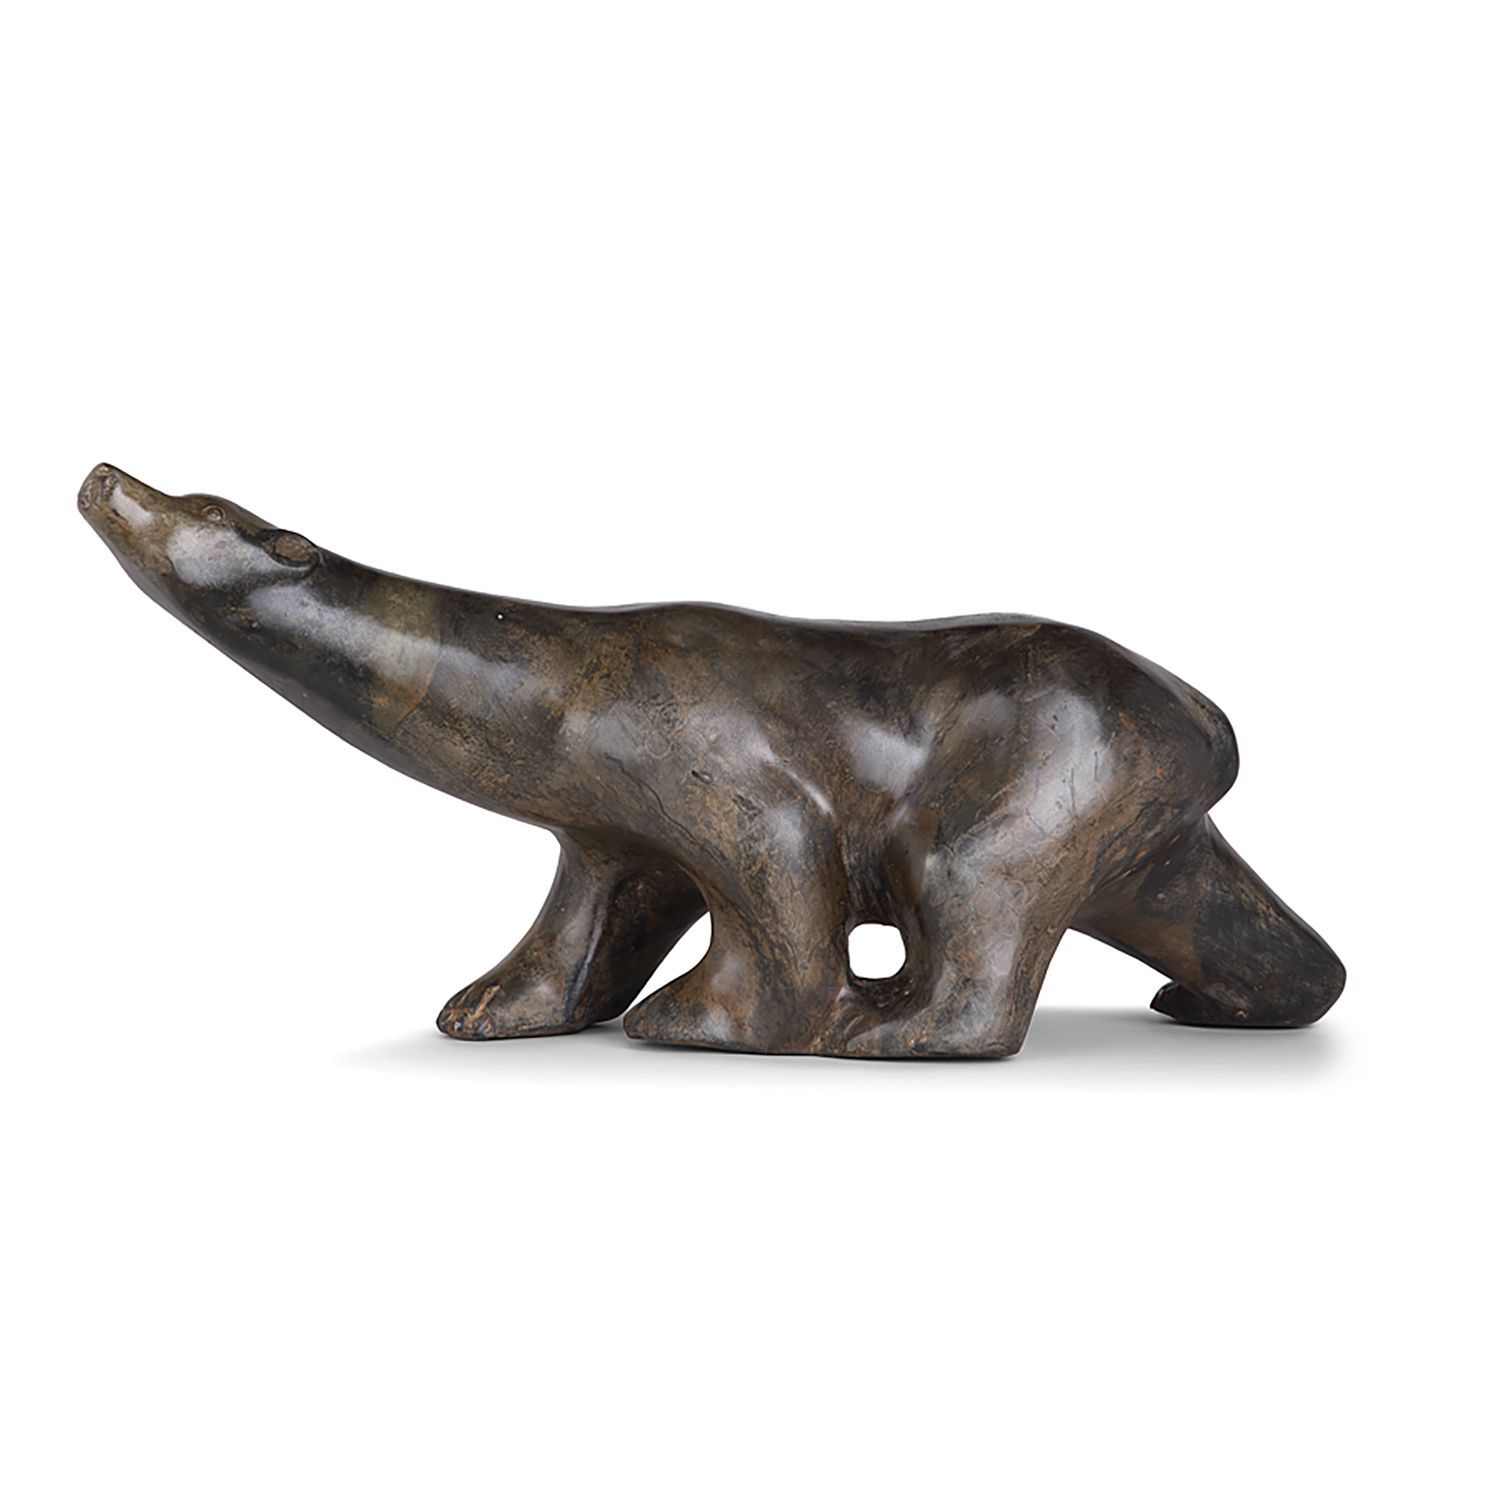 Null PIERRE CHENET (XXE-XIXE CENTURIES)

POLAR BEAR 

Bronze with brown and ochr&hellip;